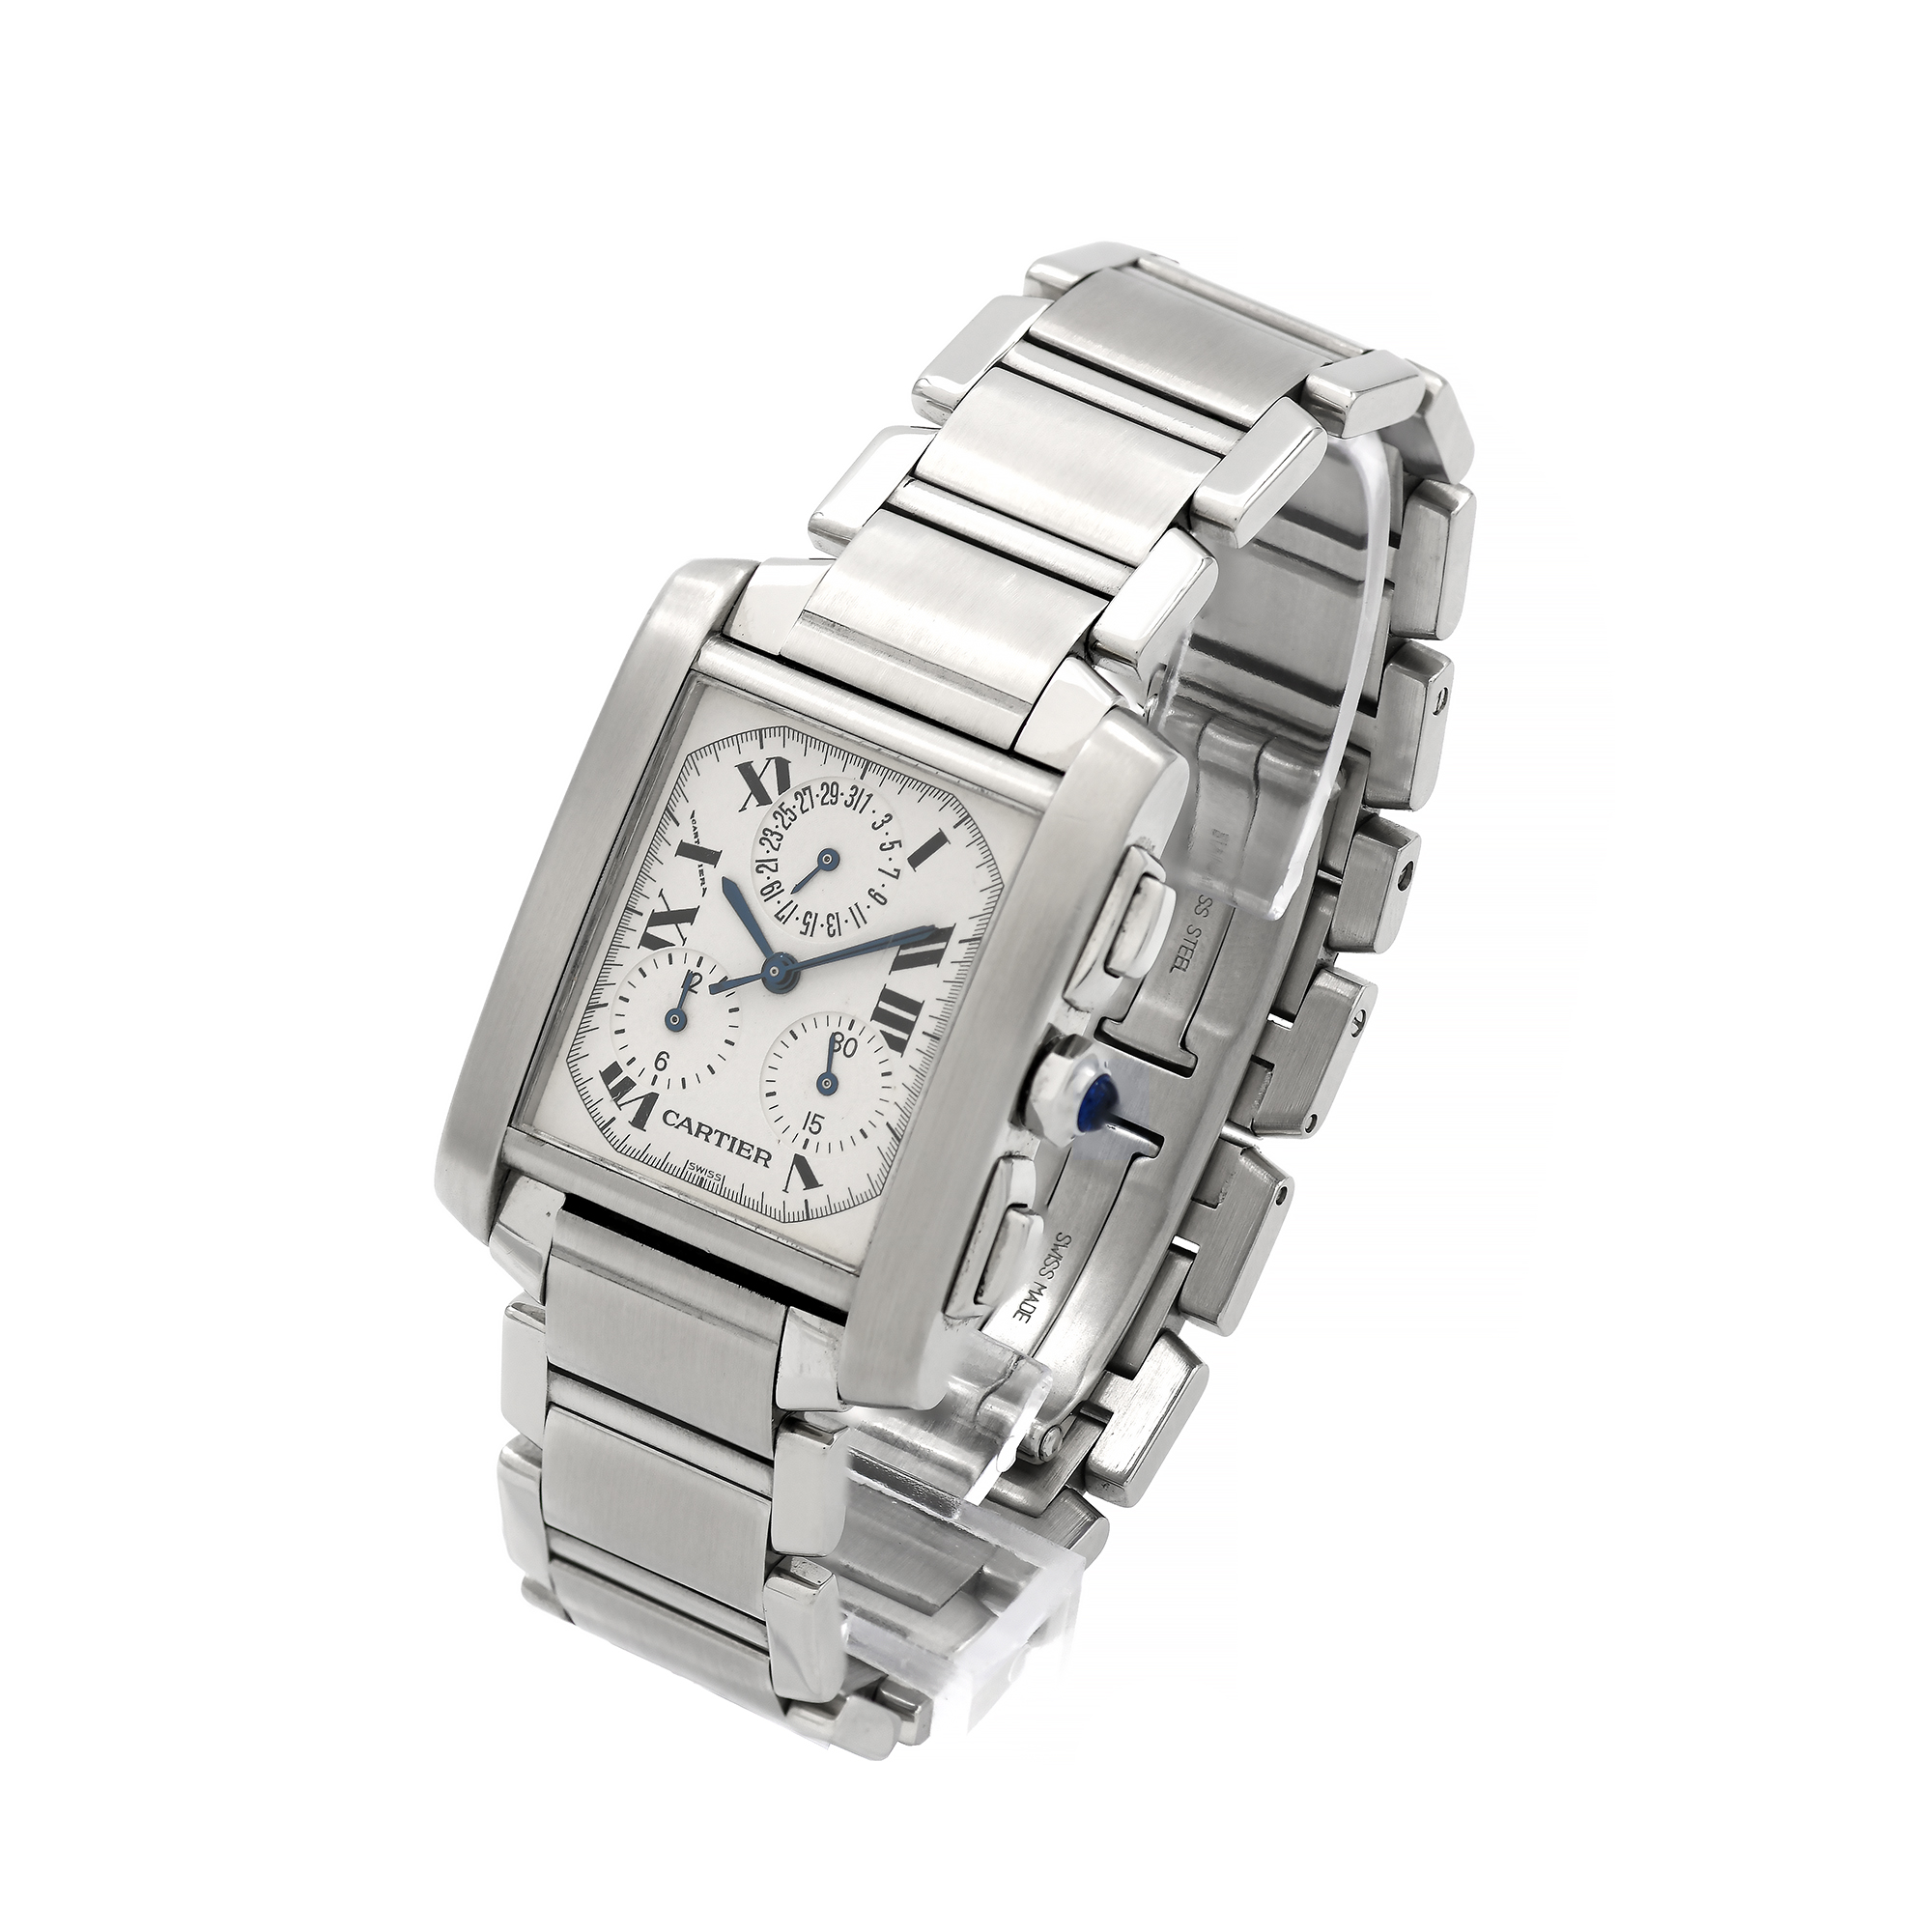 Cartier Steel Tank Francaise 2303 Quartz Chronograph Wrist Watch | eBay